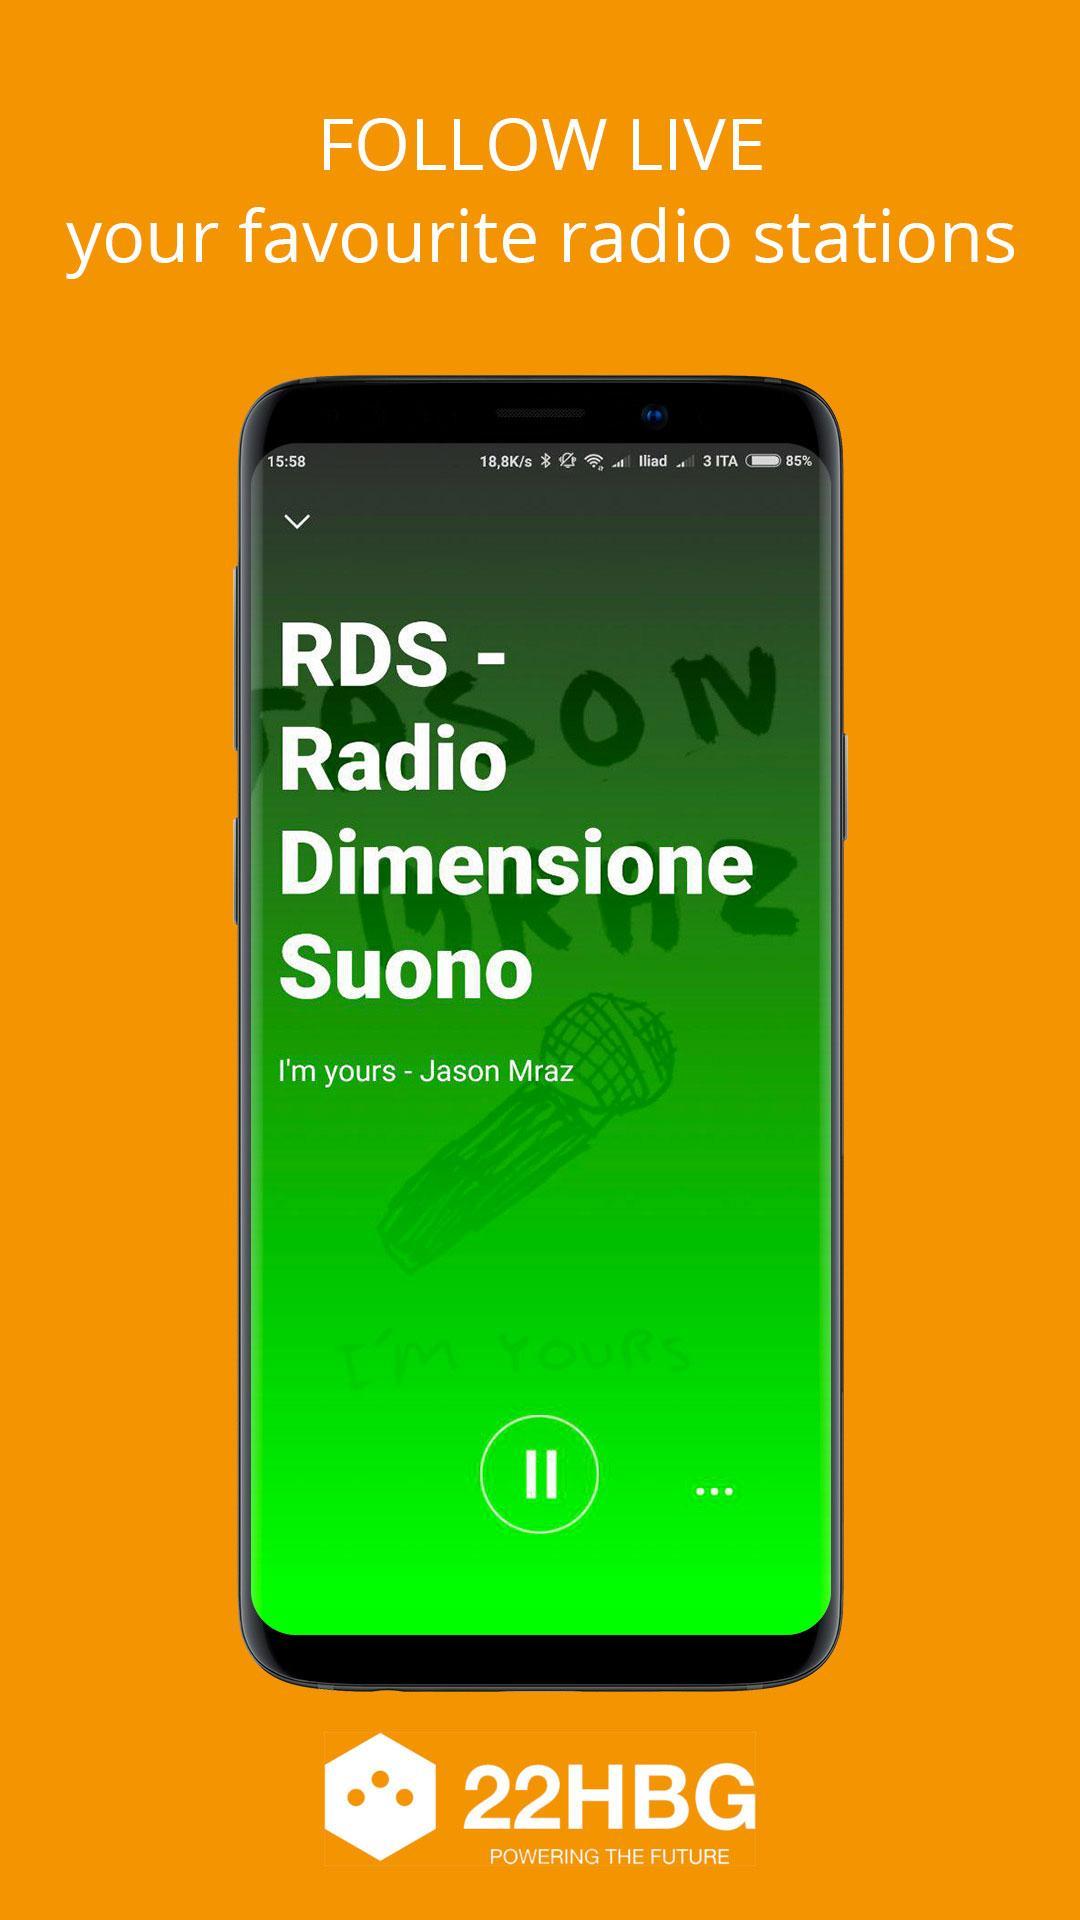 FM-World Radio App